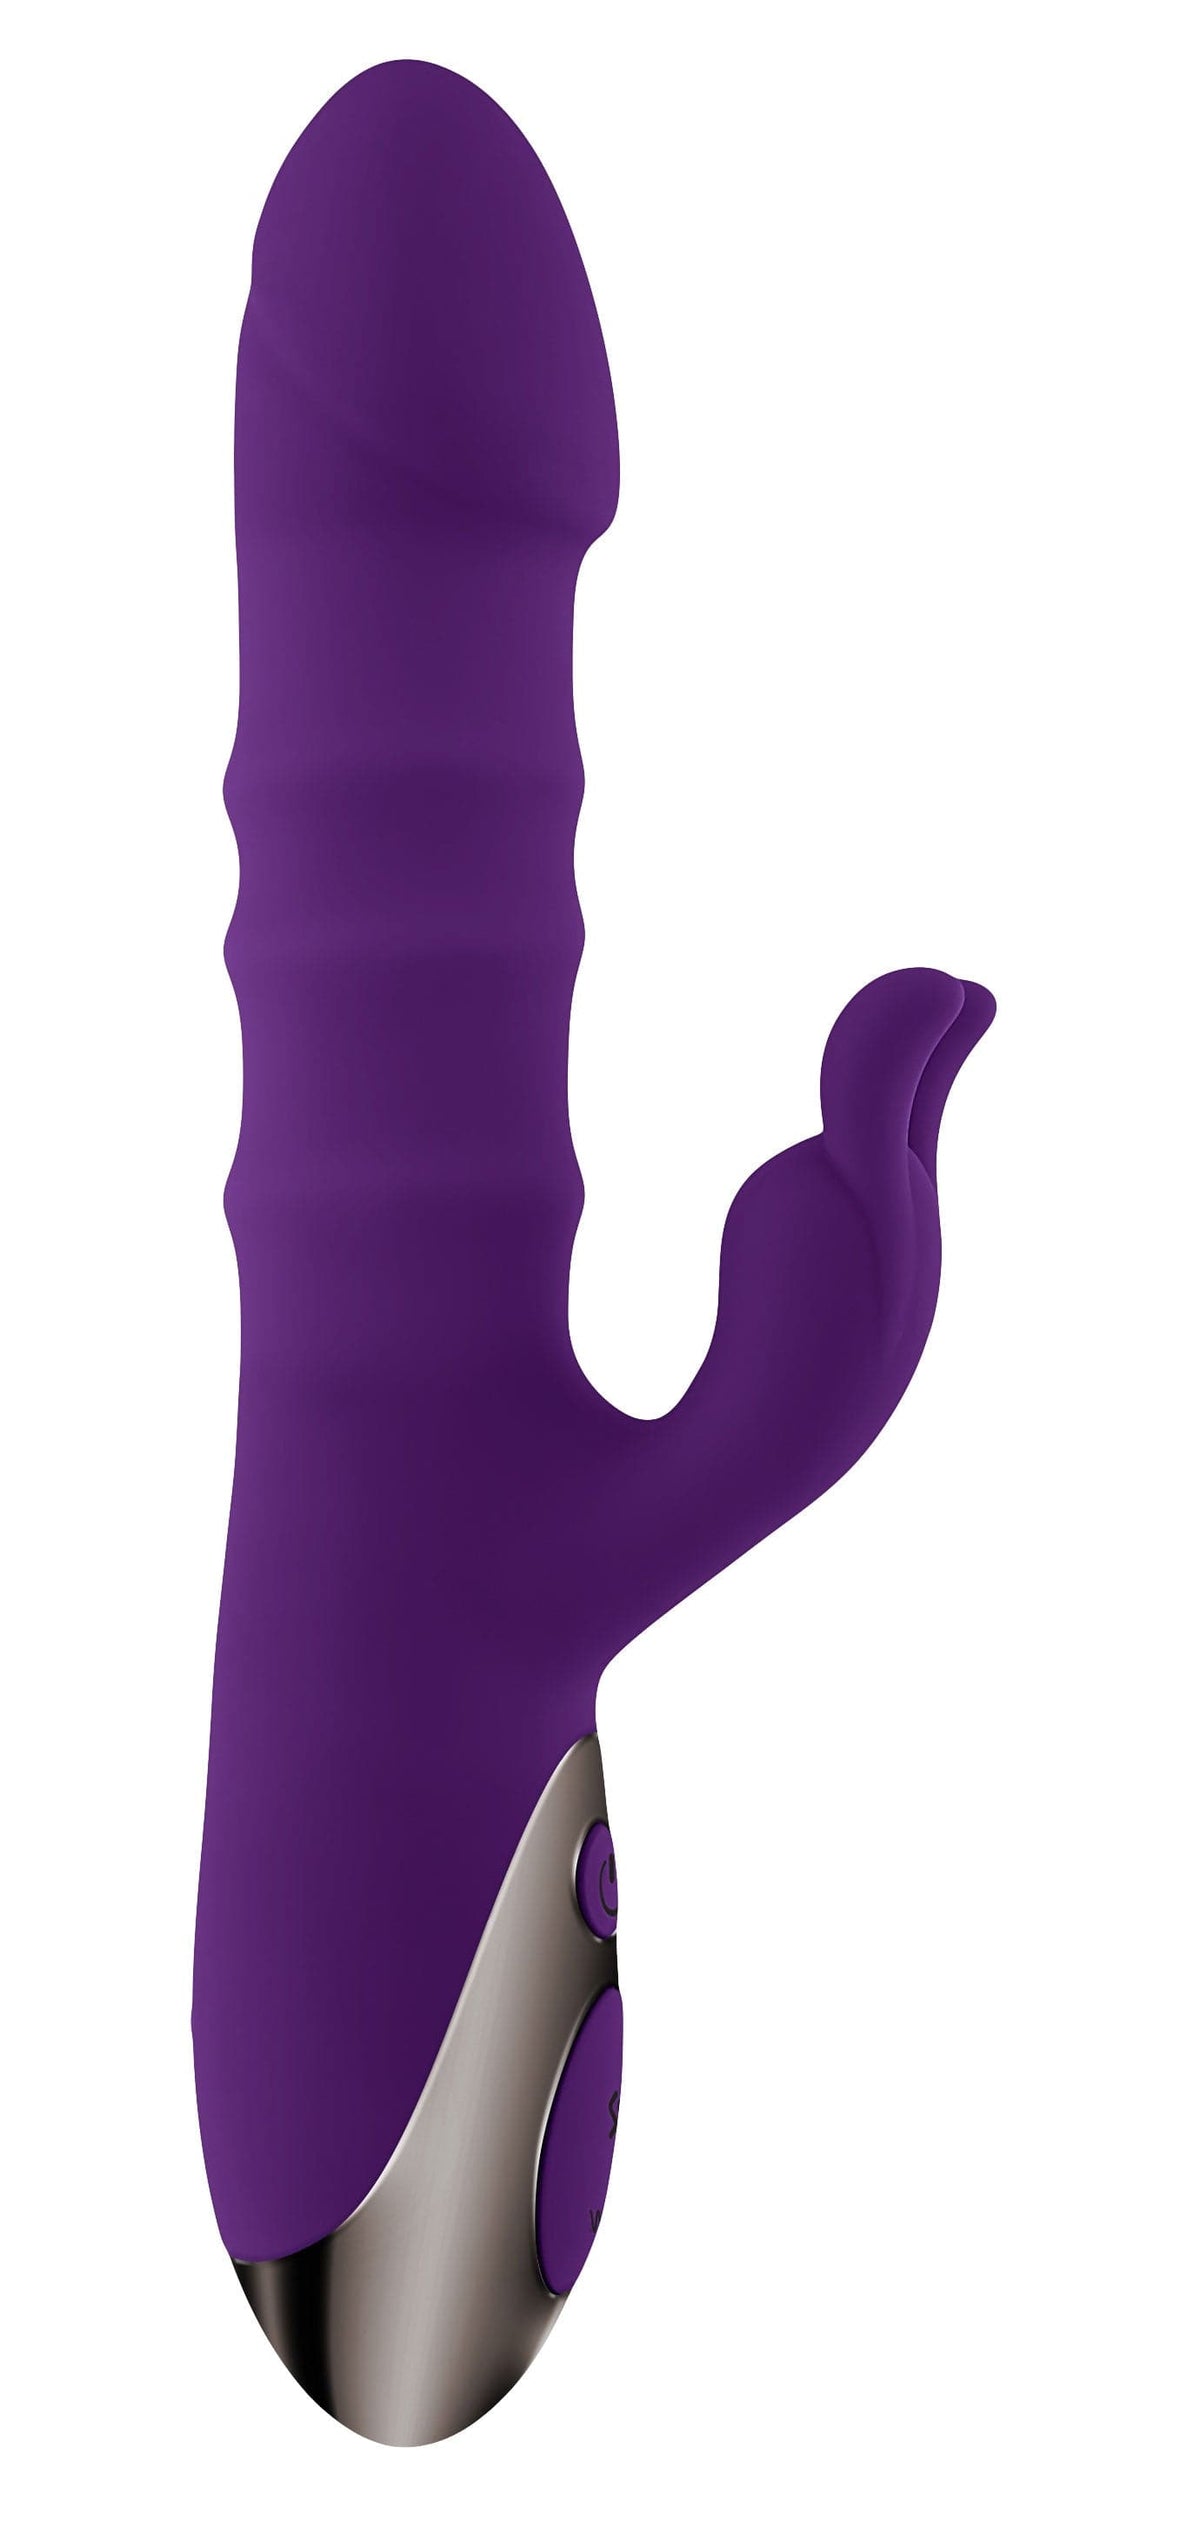 hop to it rabbit vibrator dark purple